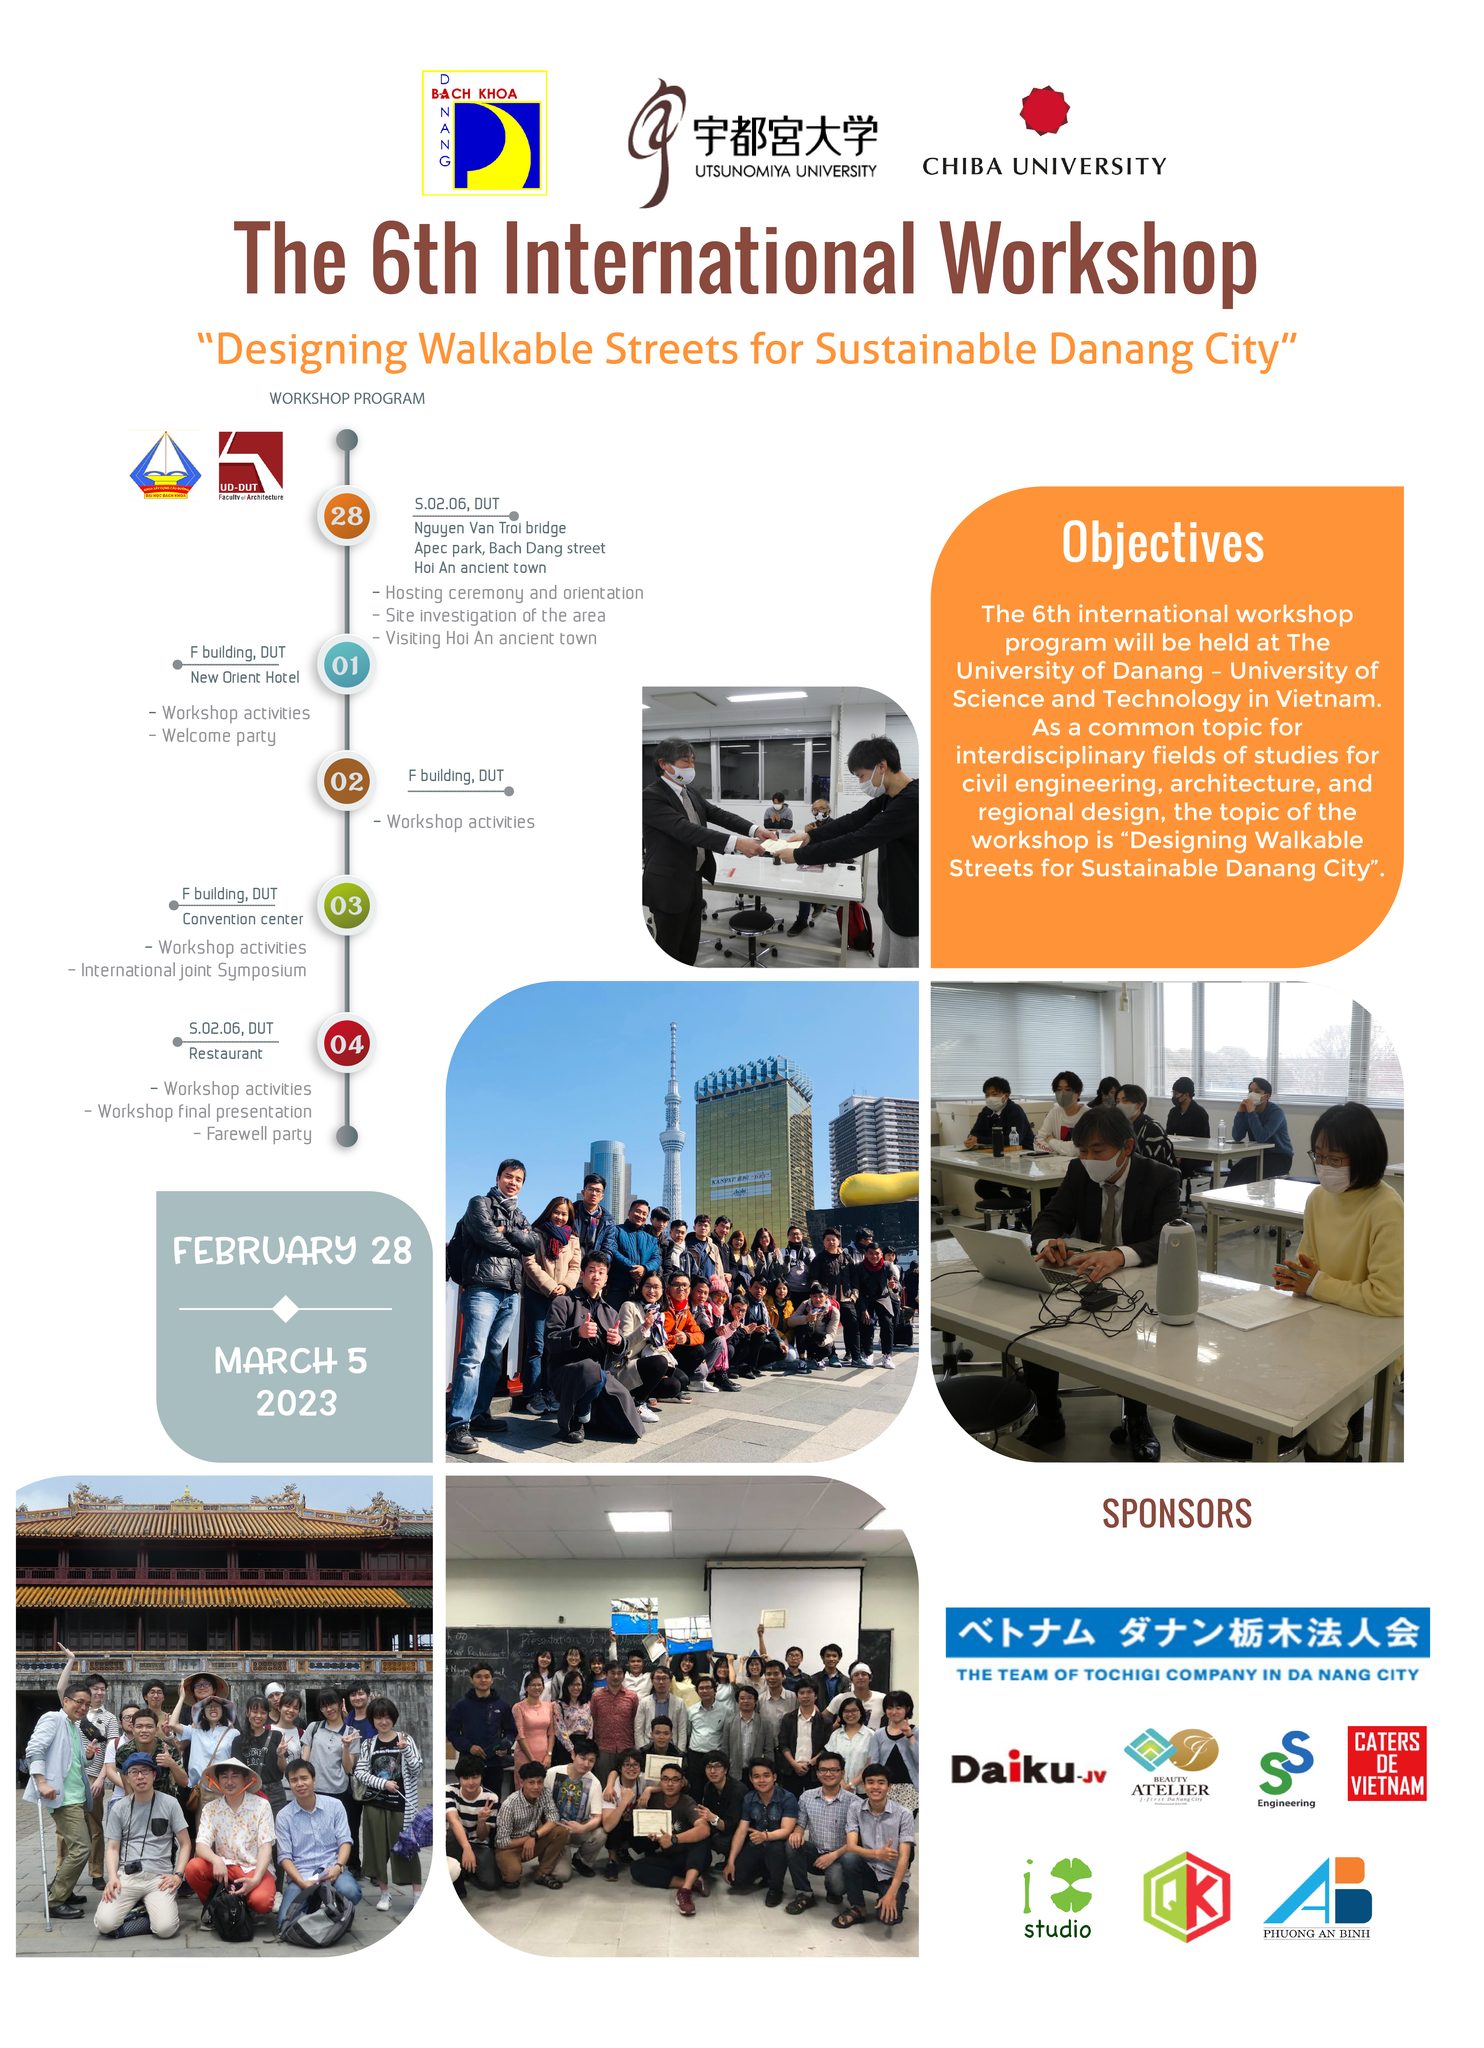 The 6th International Workshop between The University of Danang – University of Science And Technology, Vietnam and Utsunomiya University, Chiba University, Japan